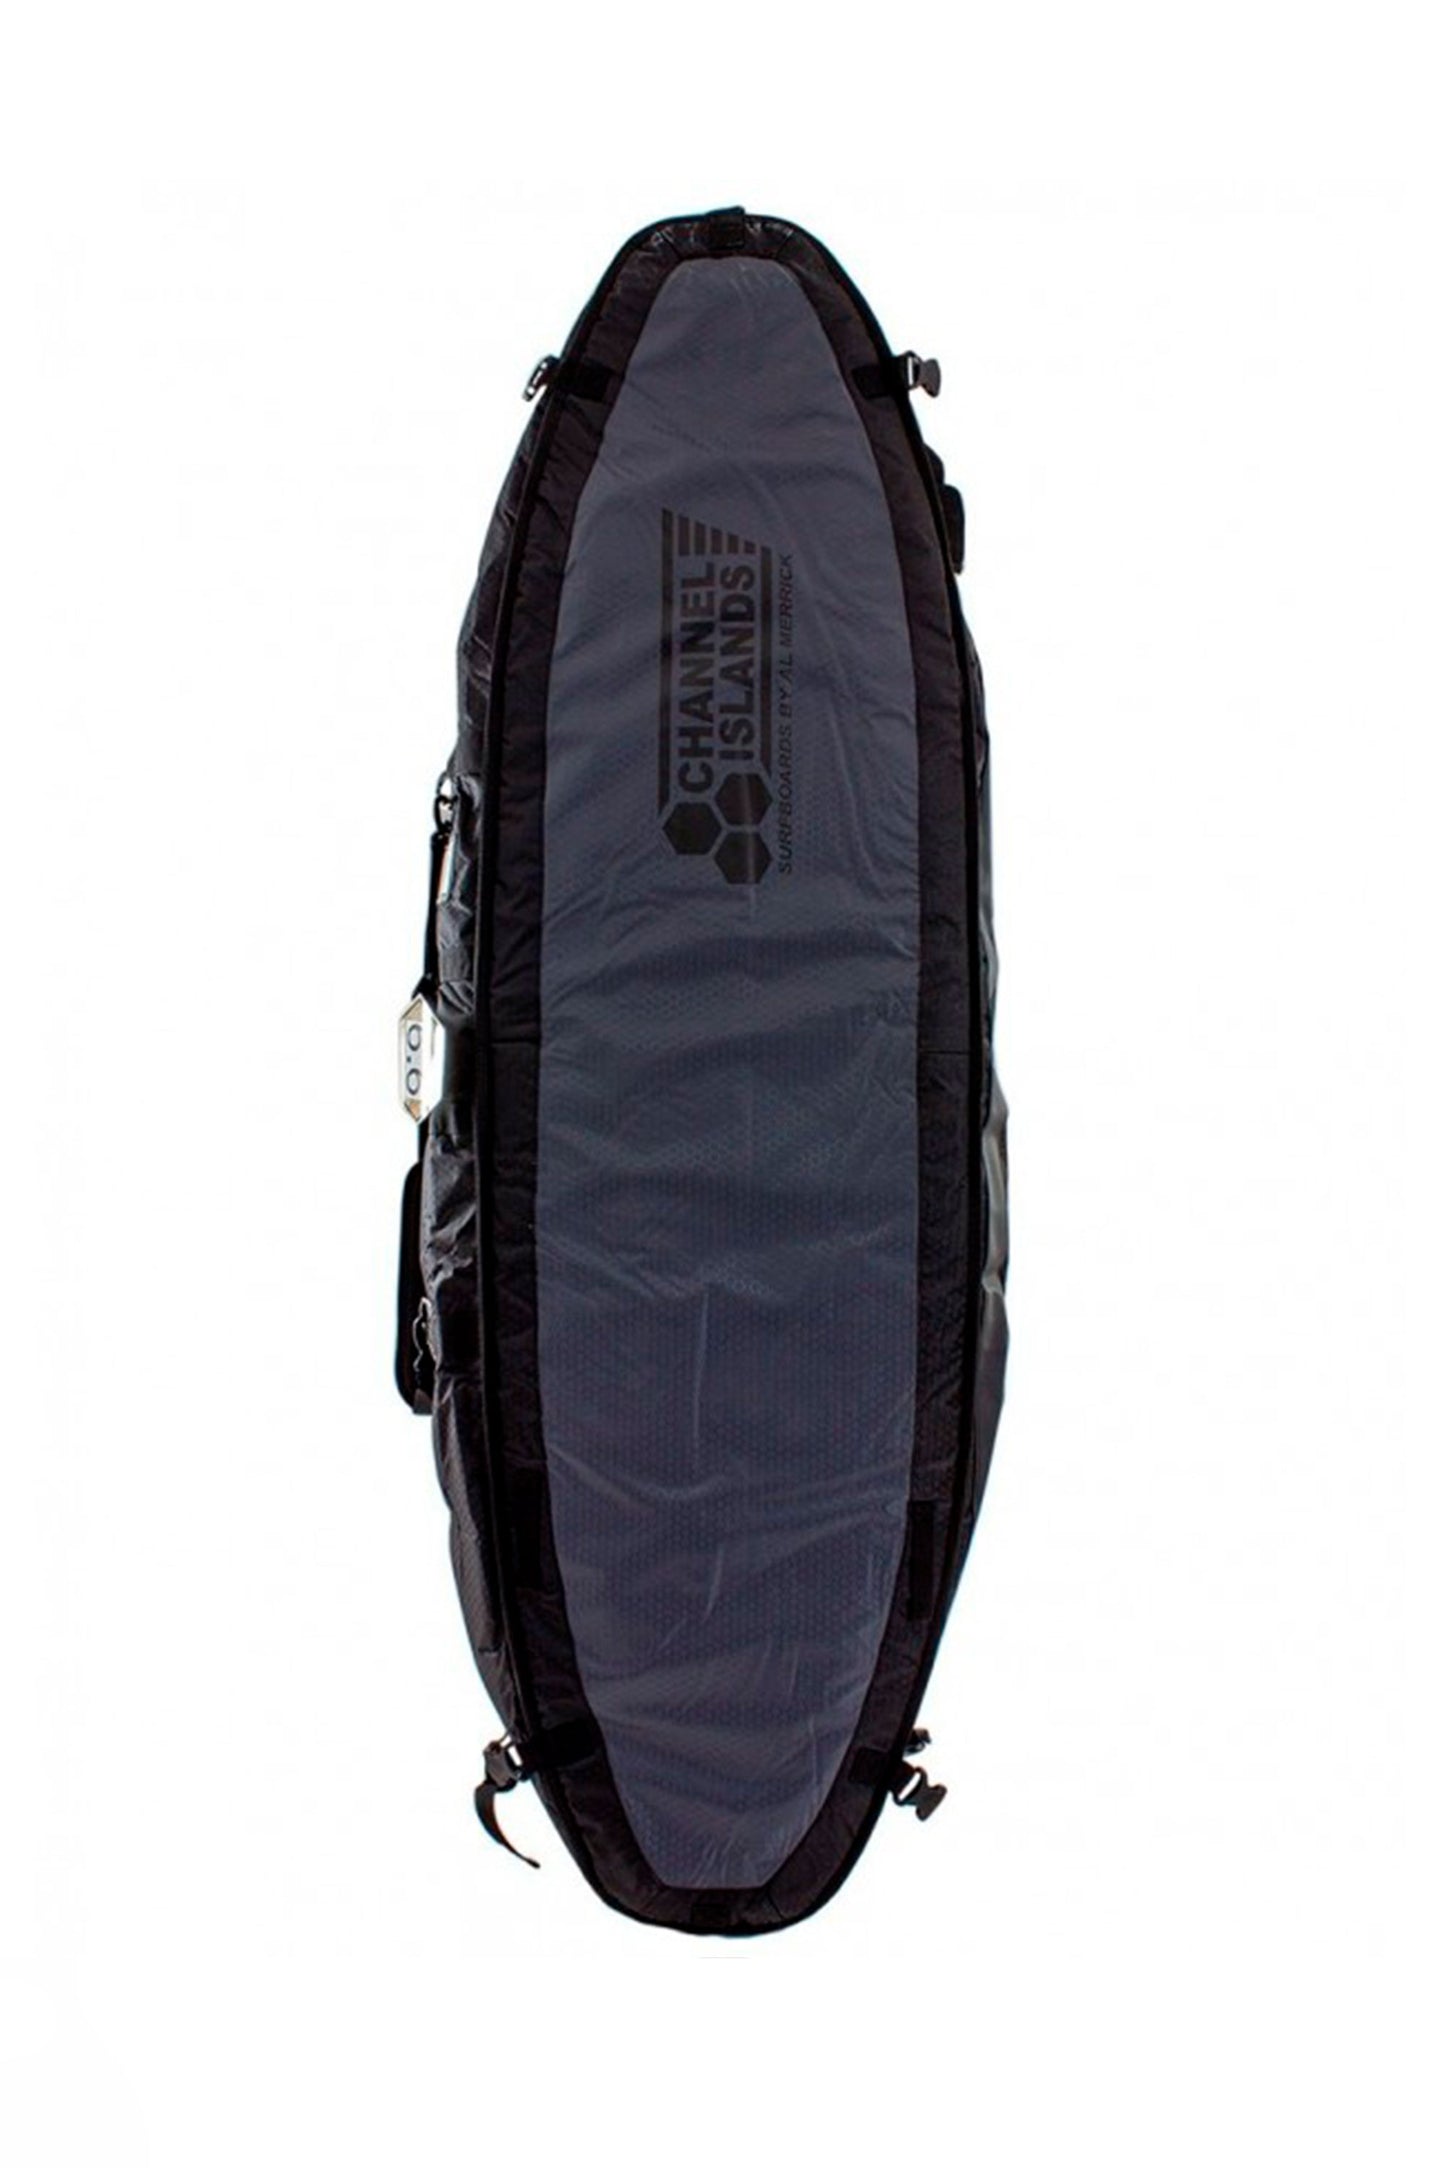    Pukas-Surf-Shop-Channel-Islands-Boardbags-Travel-Bag-CX4-Quad-Charcoal